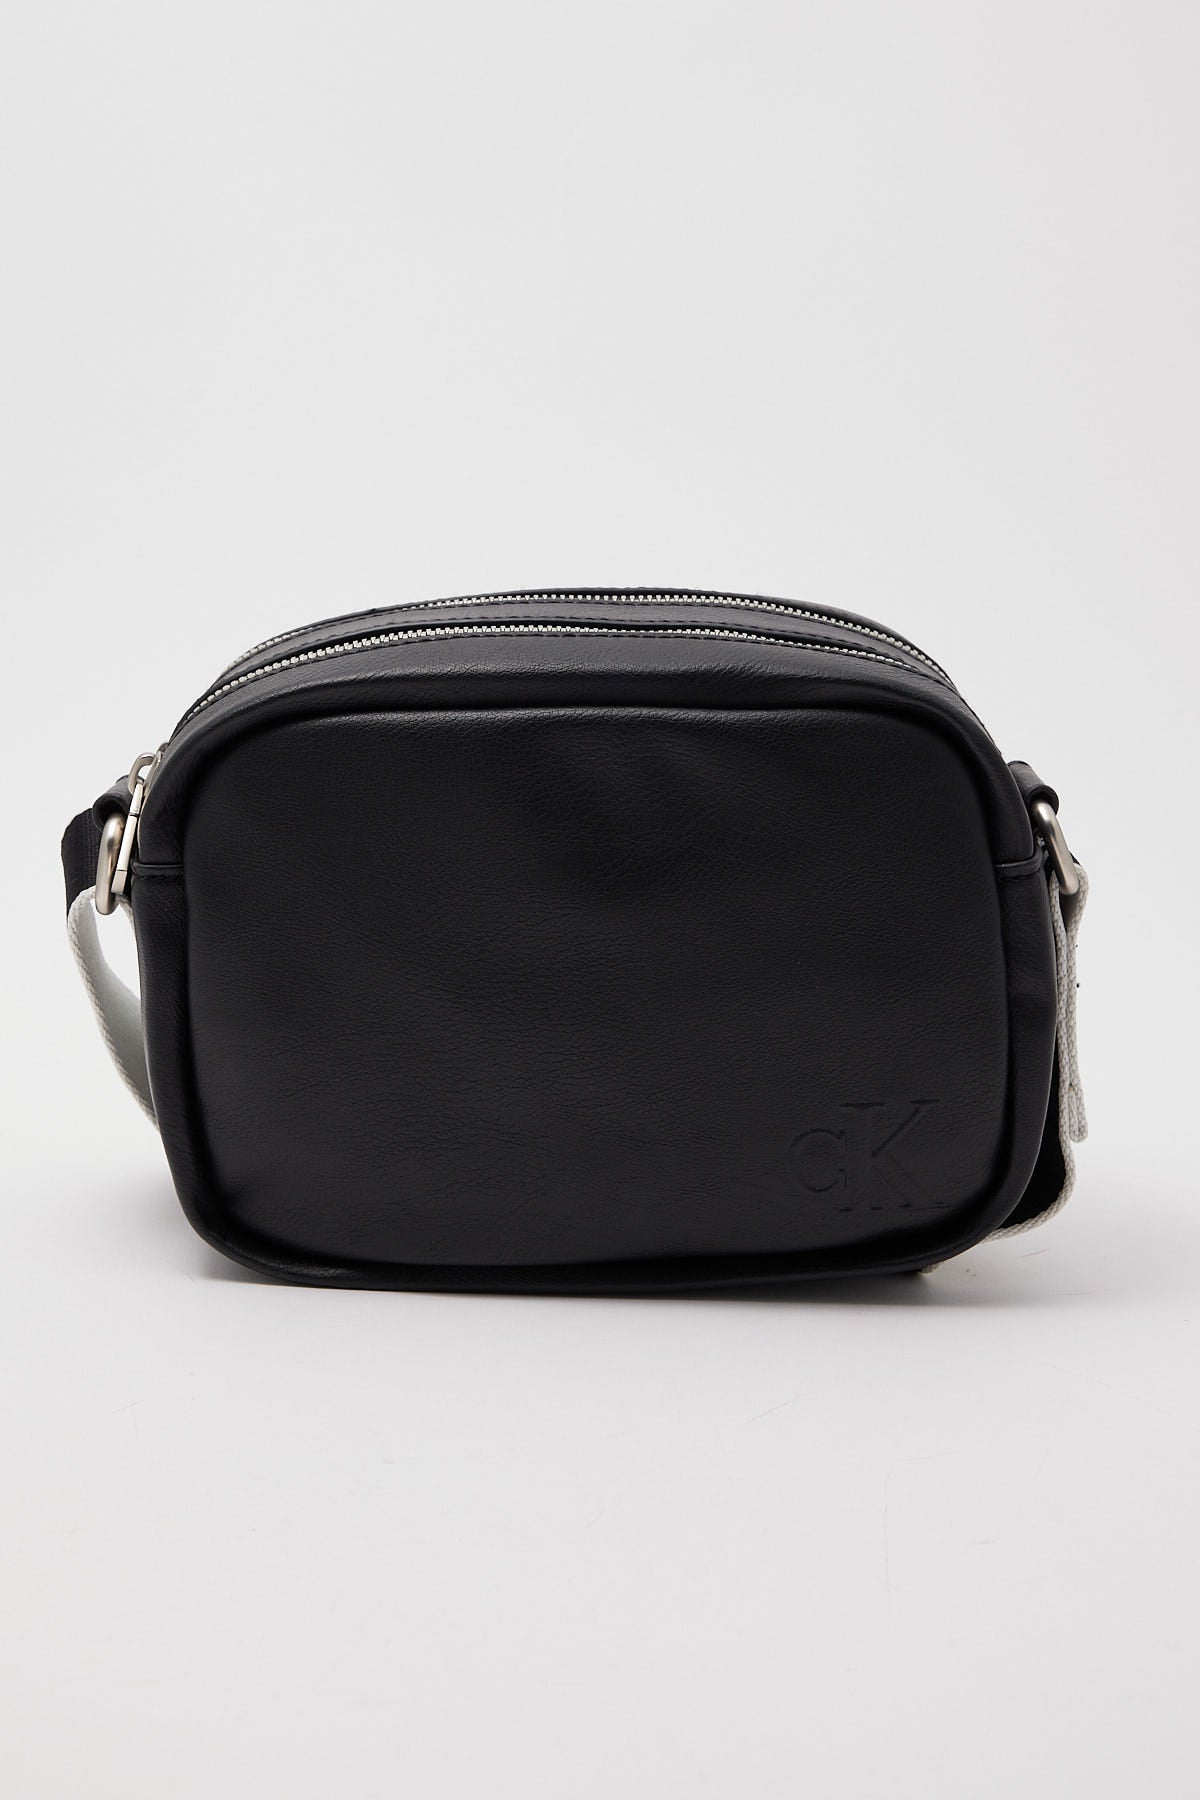 Calvin Klein Ultralight Double Zip Camera Bag Black